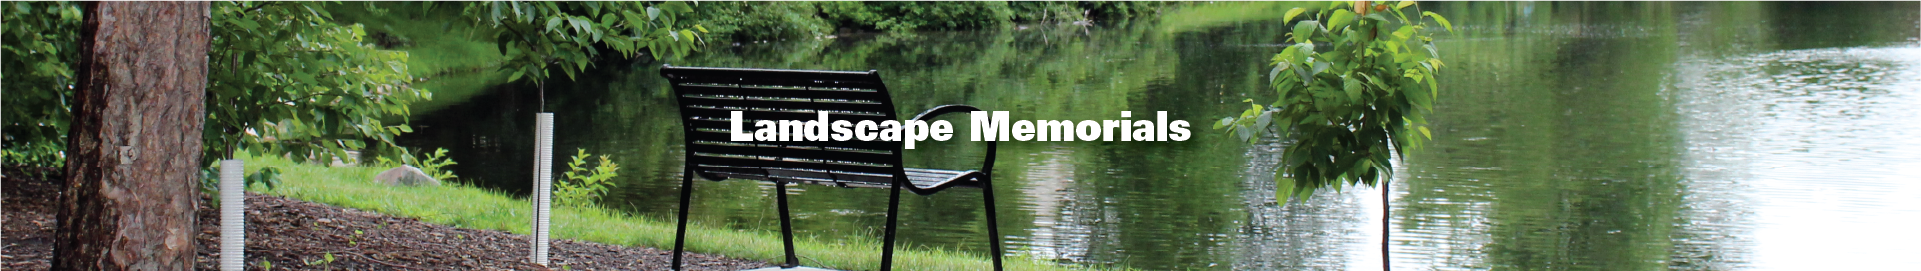 Landscape Memorials